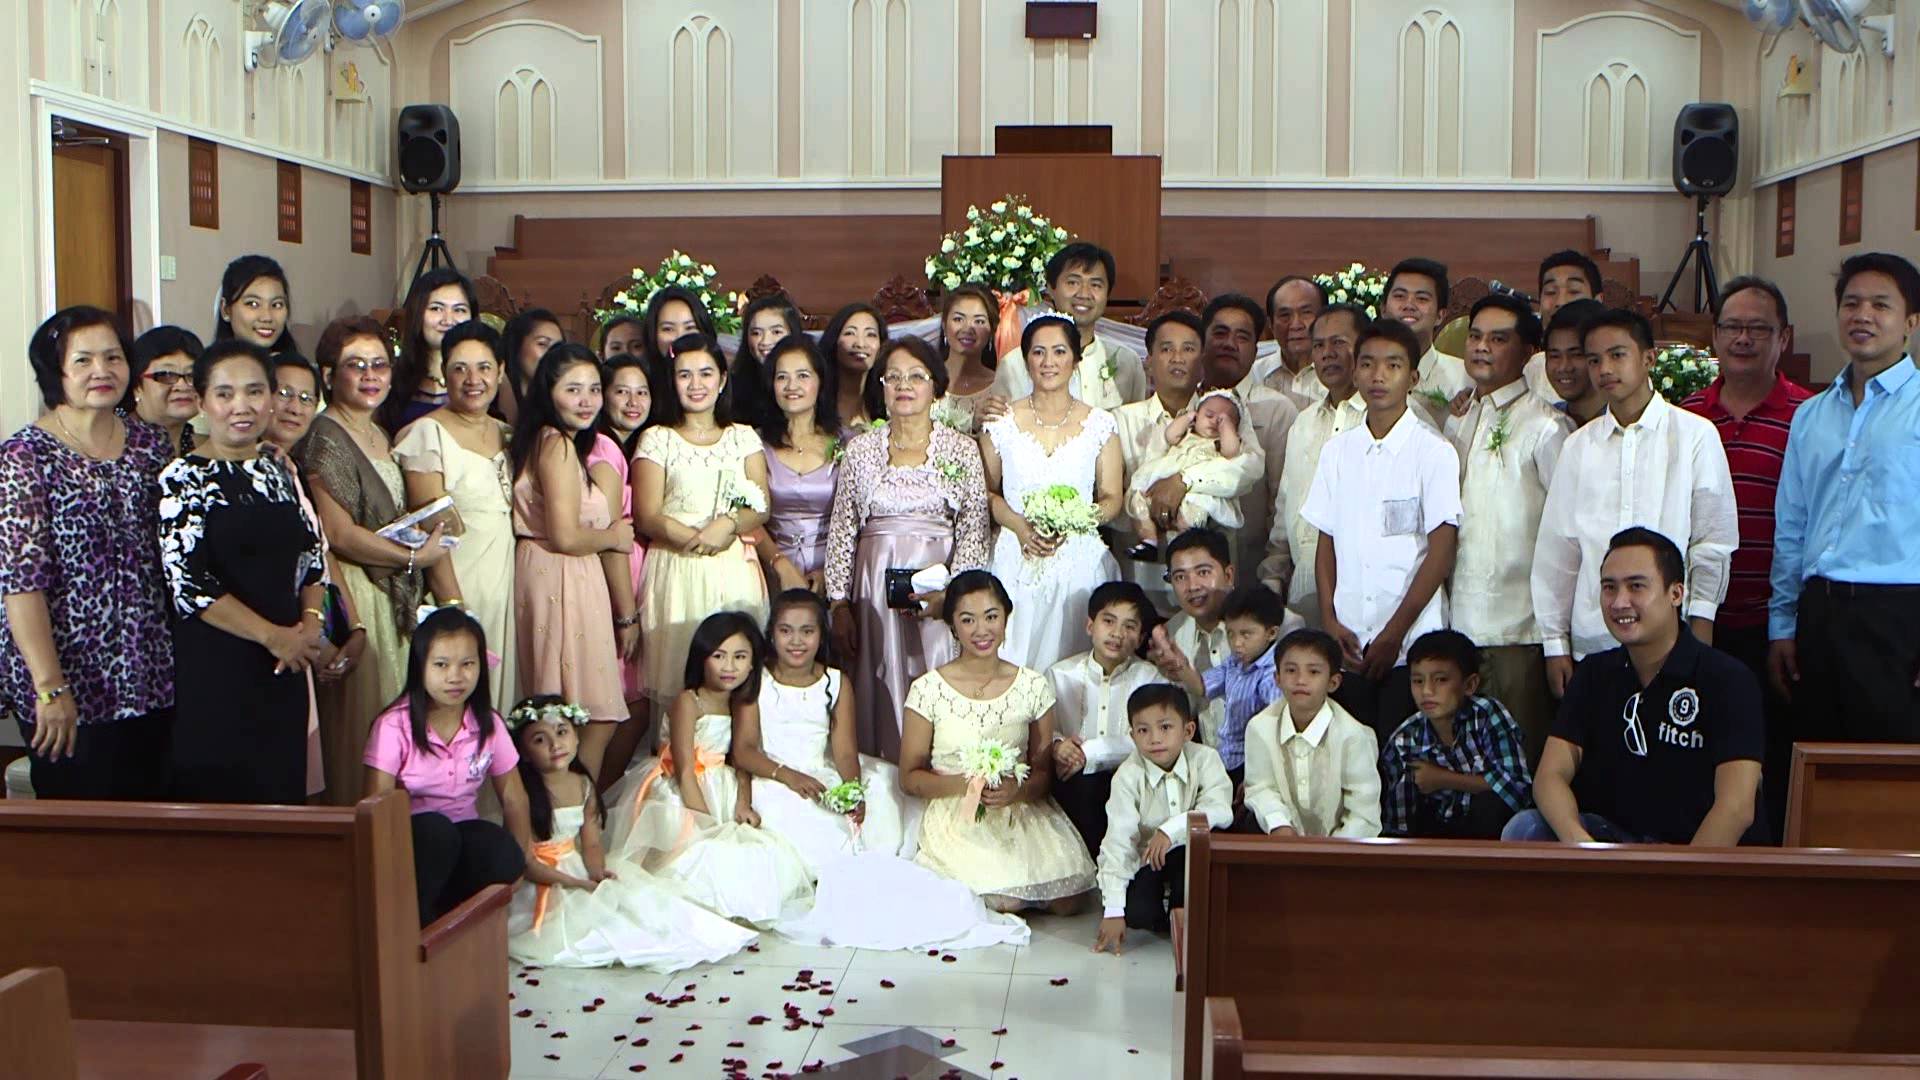 Alvin Nhor Wedding Full Video – Part 2 Renewal of Vows Philippines